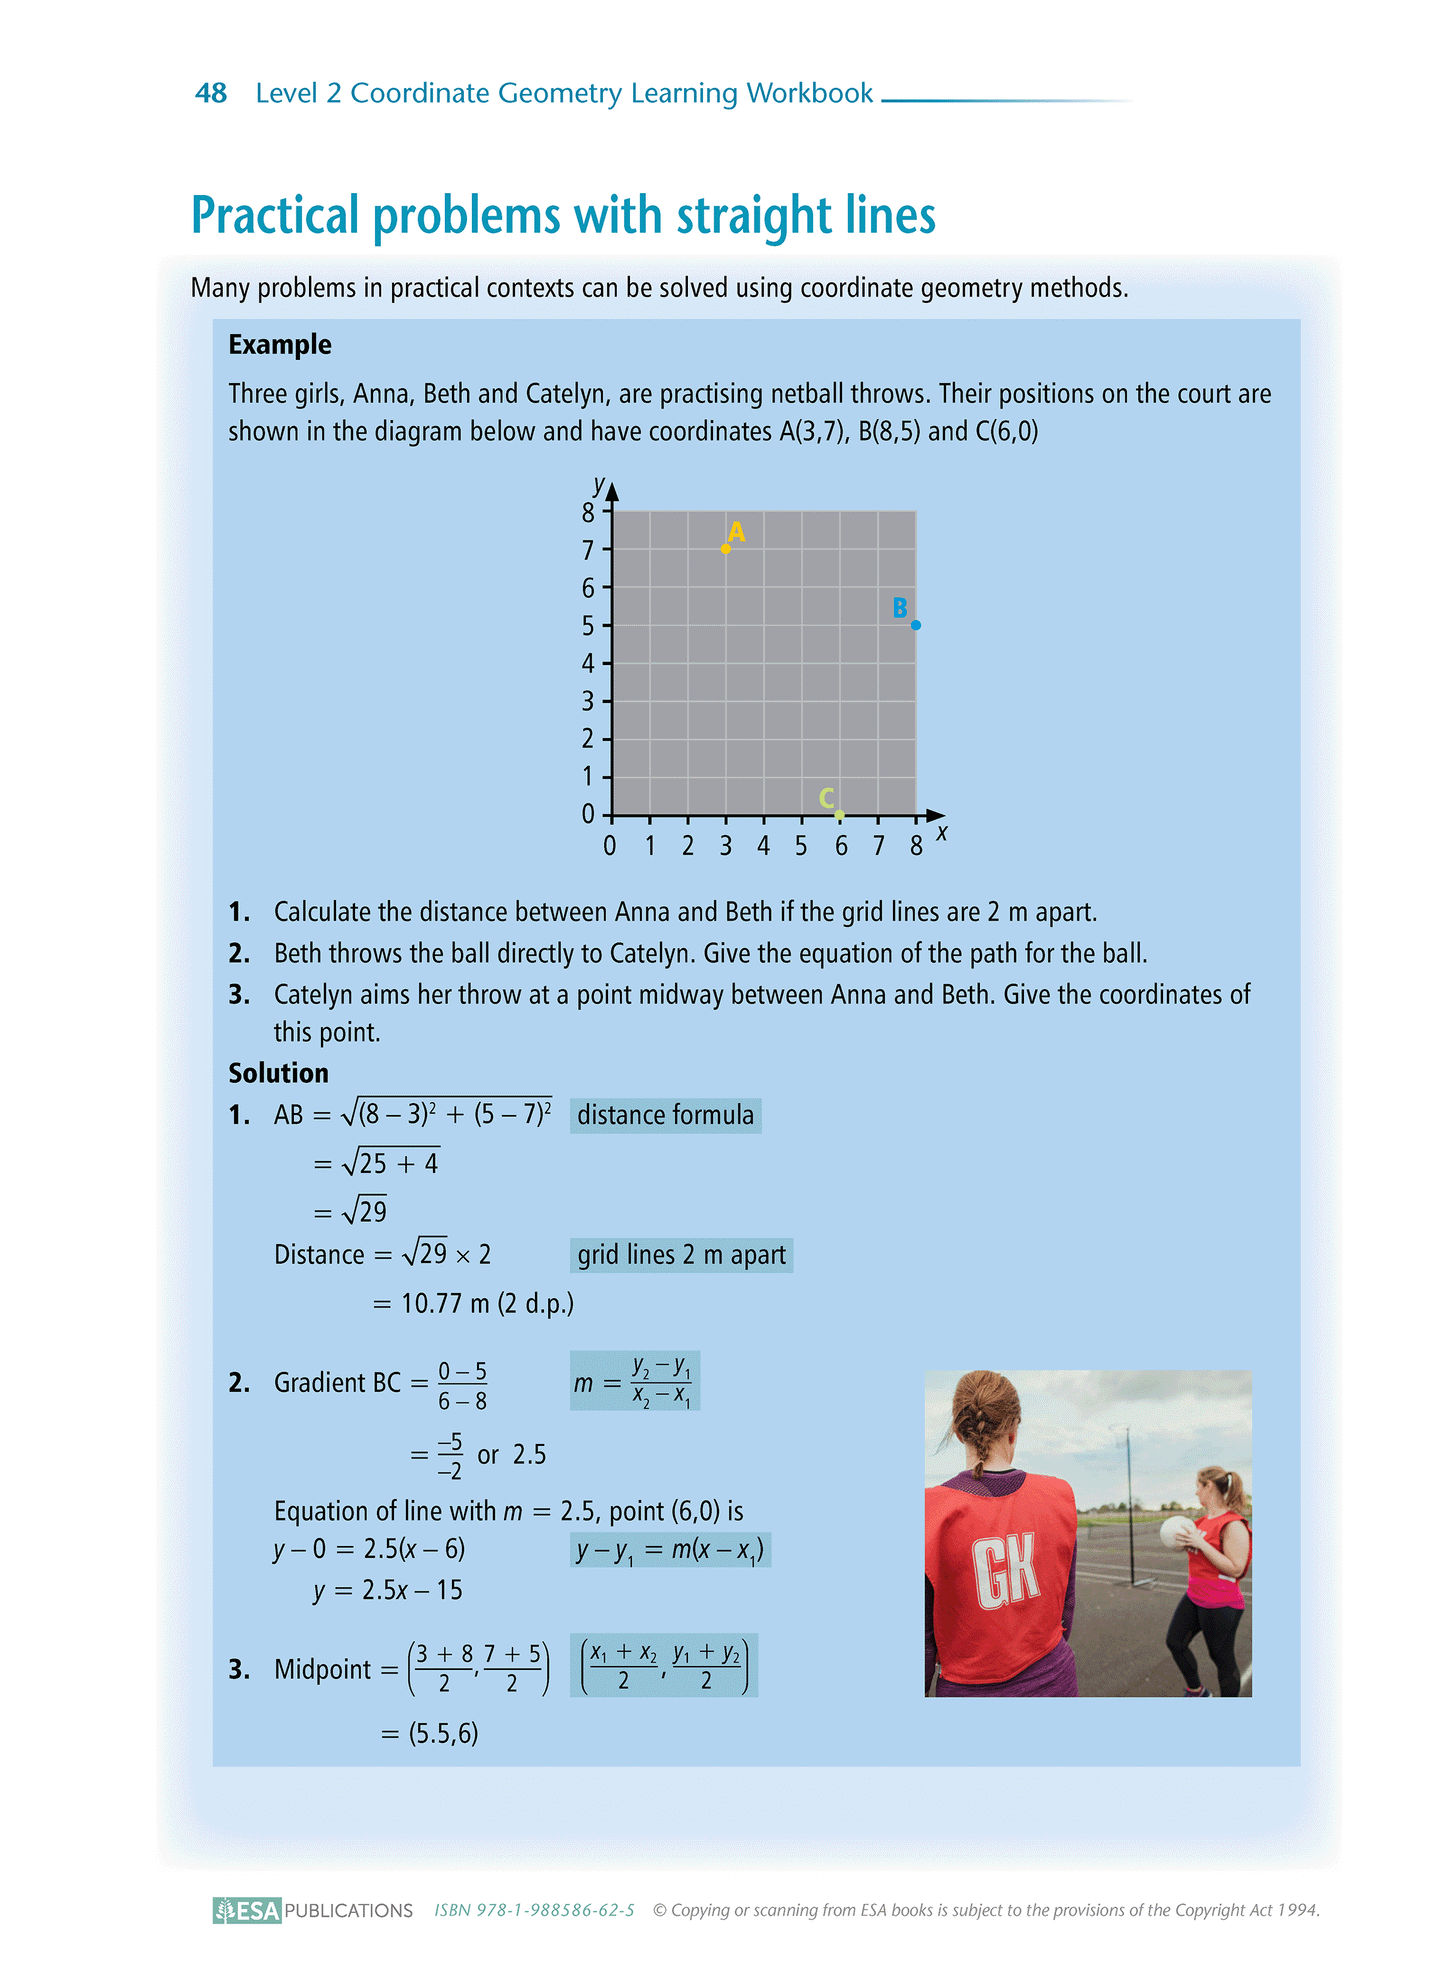 Level 2 Coordinate Geometry 2.1 Learning Workbook